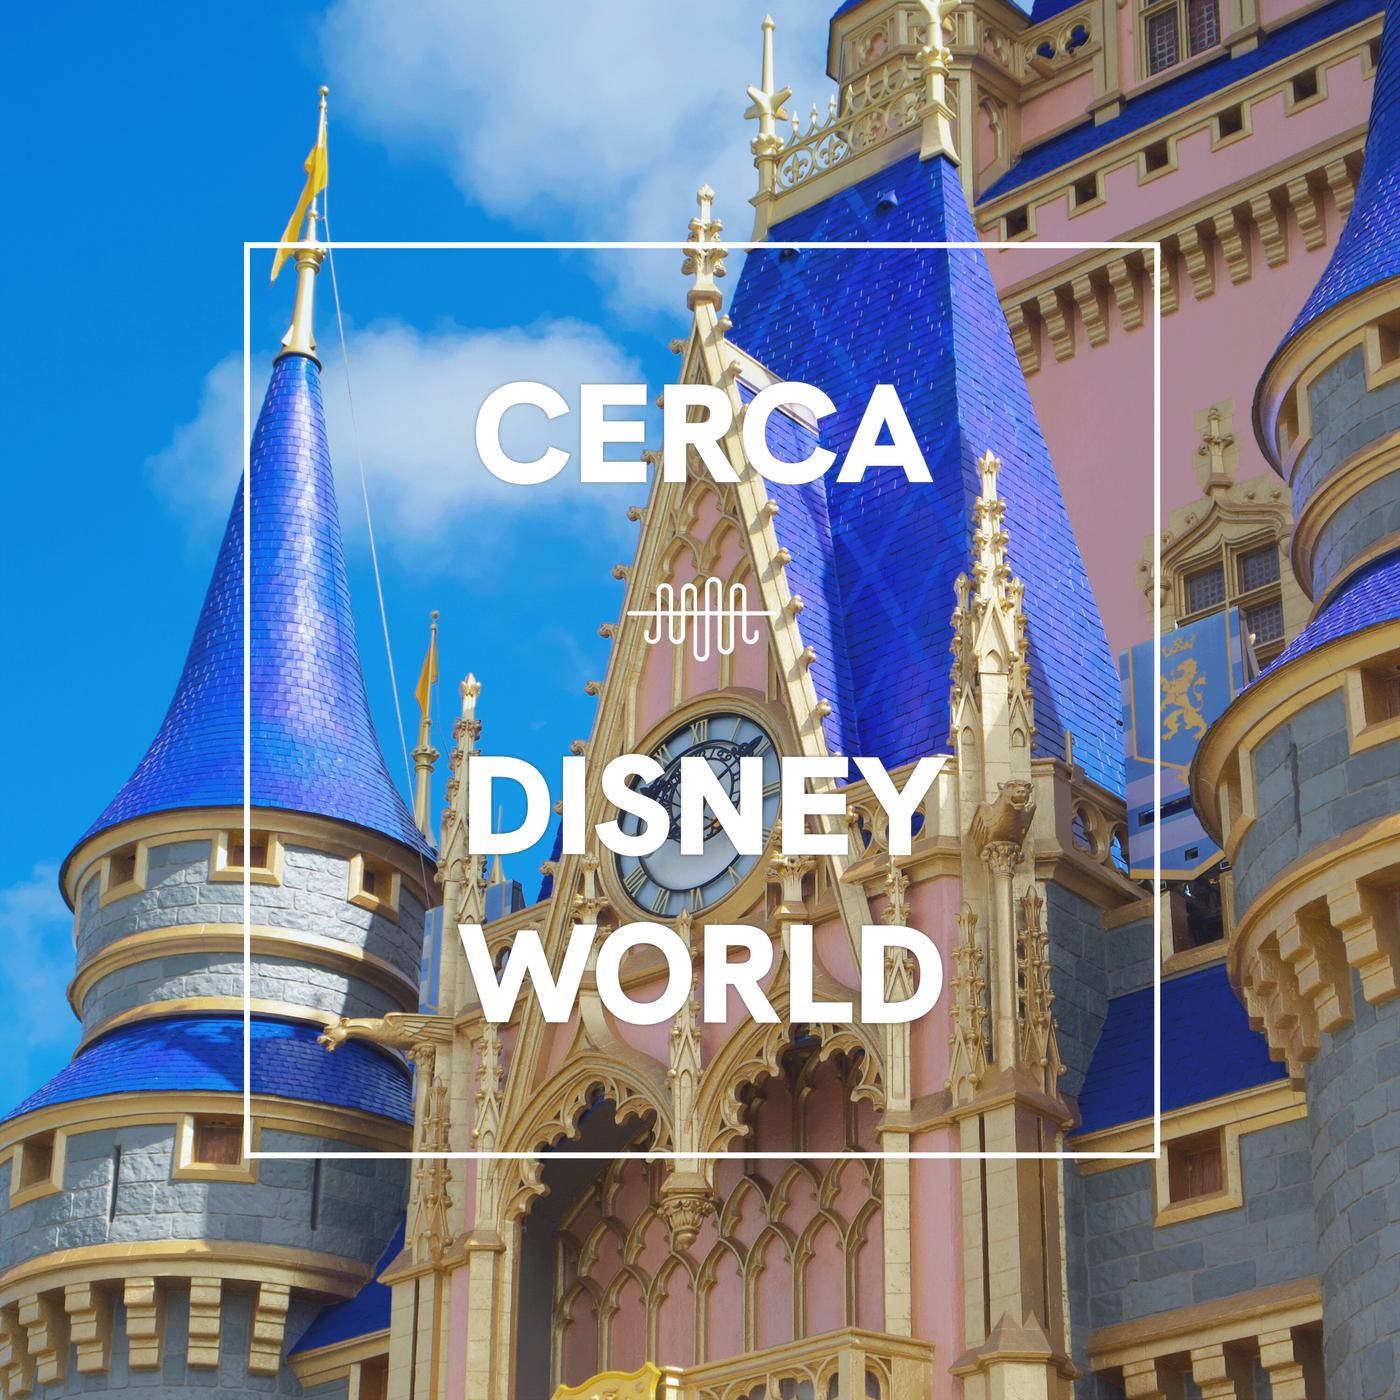 The Cerca Guide to Disney World